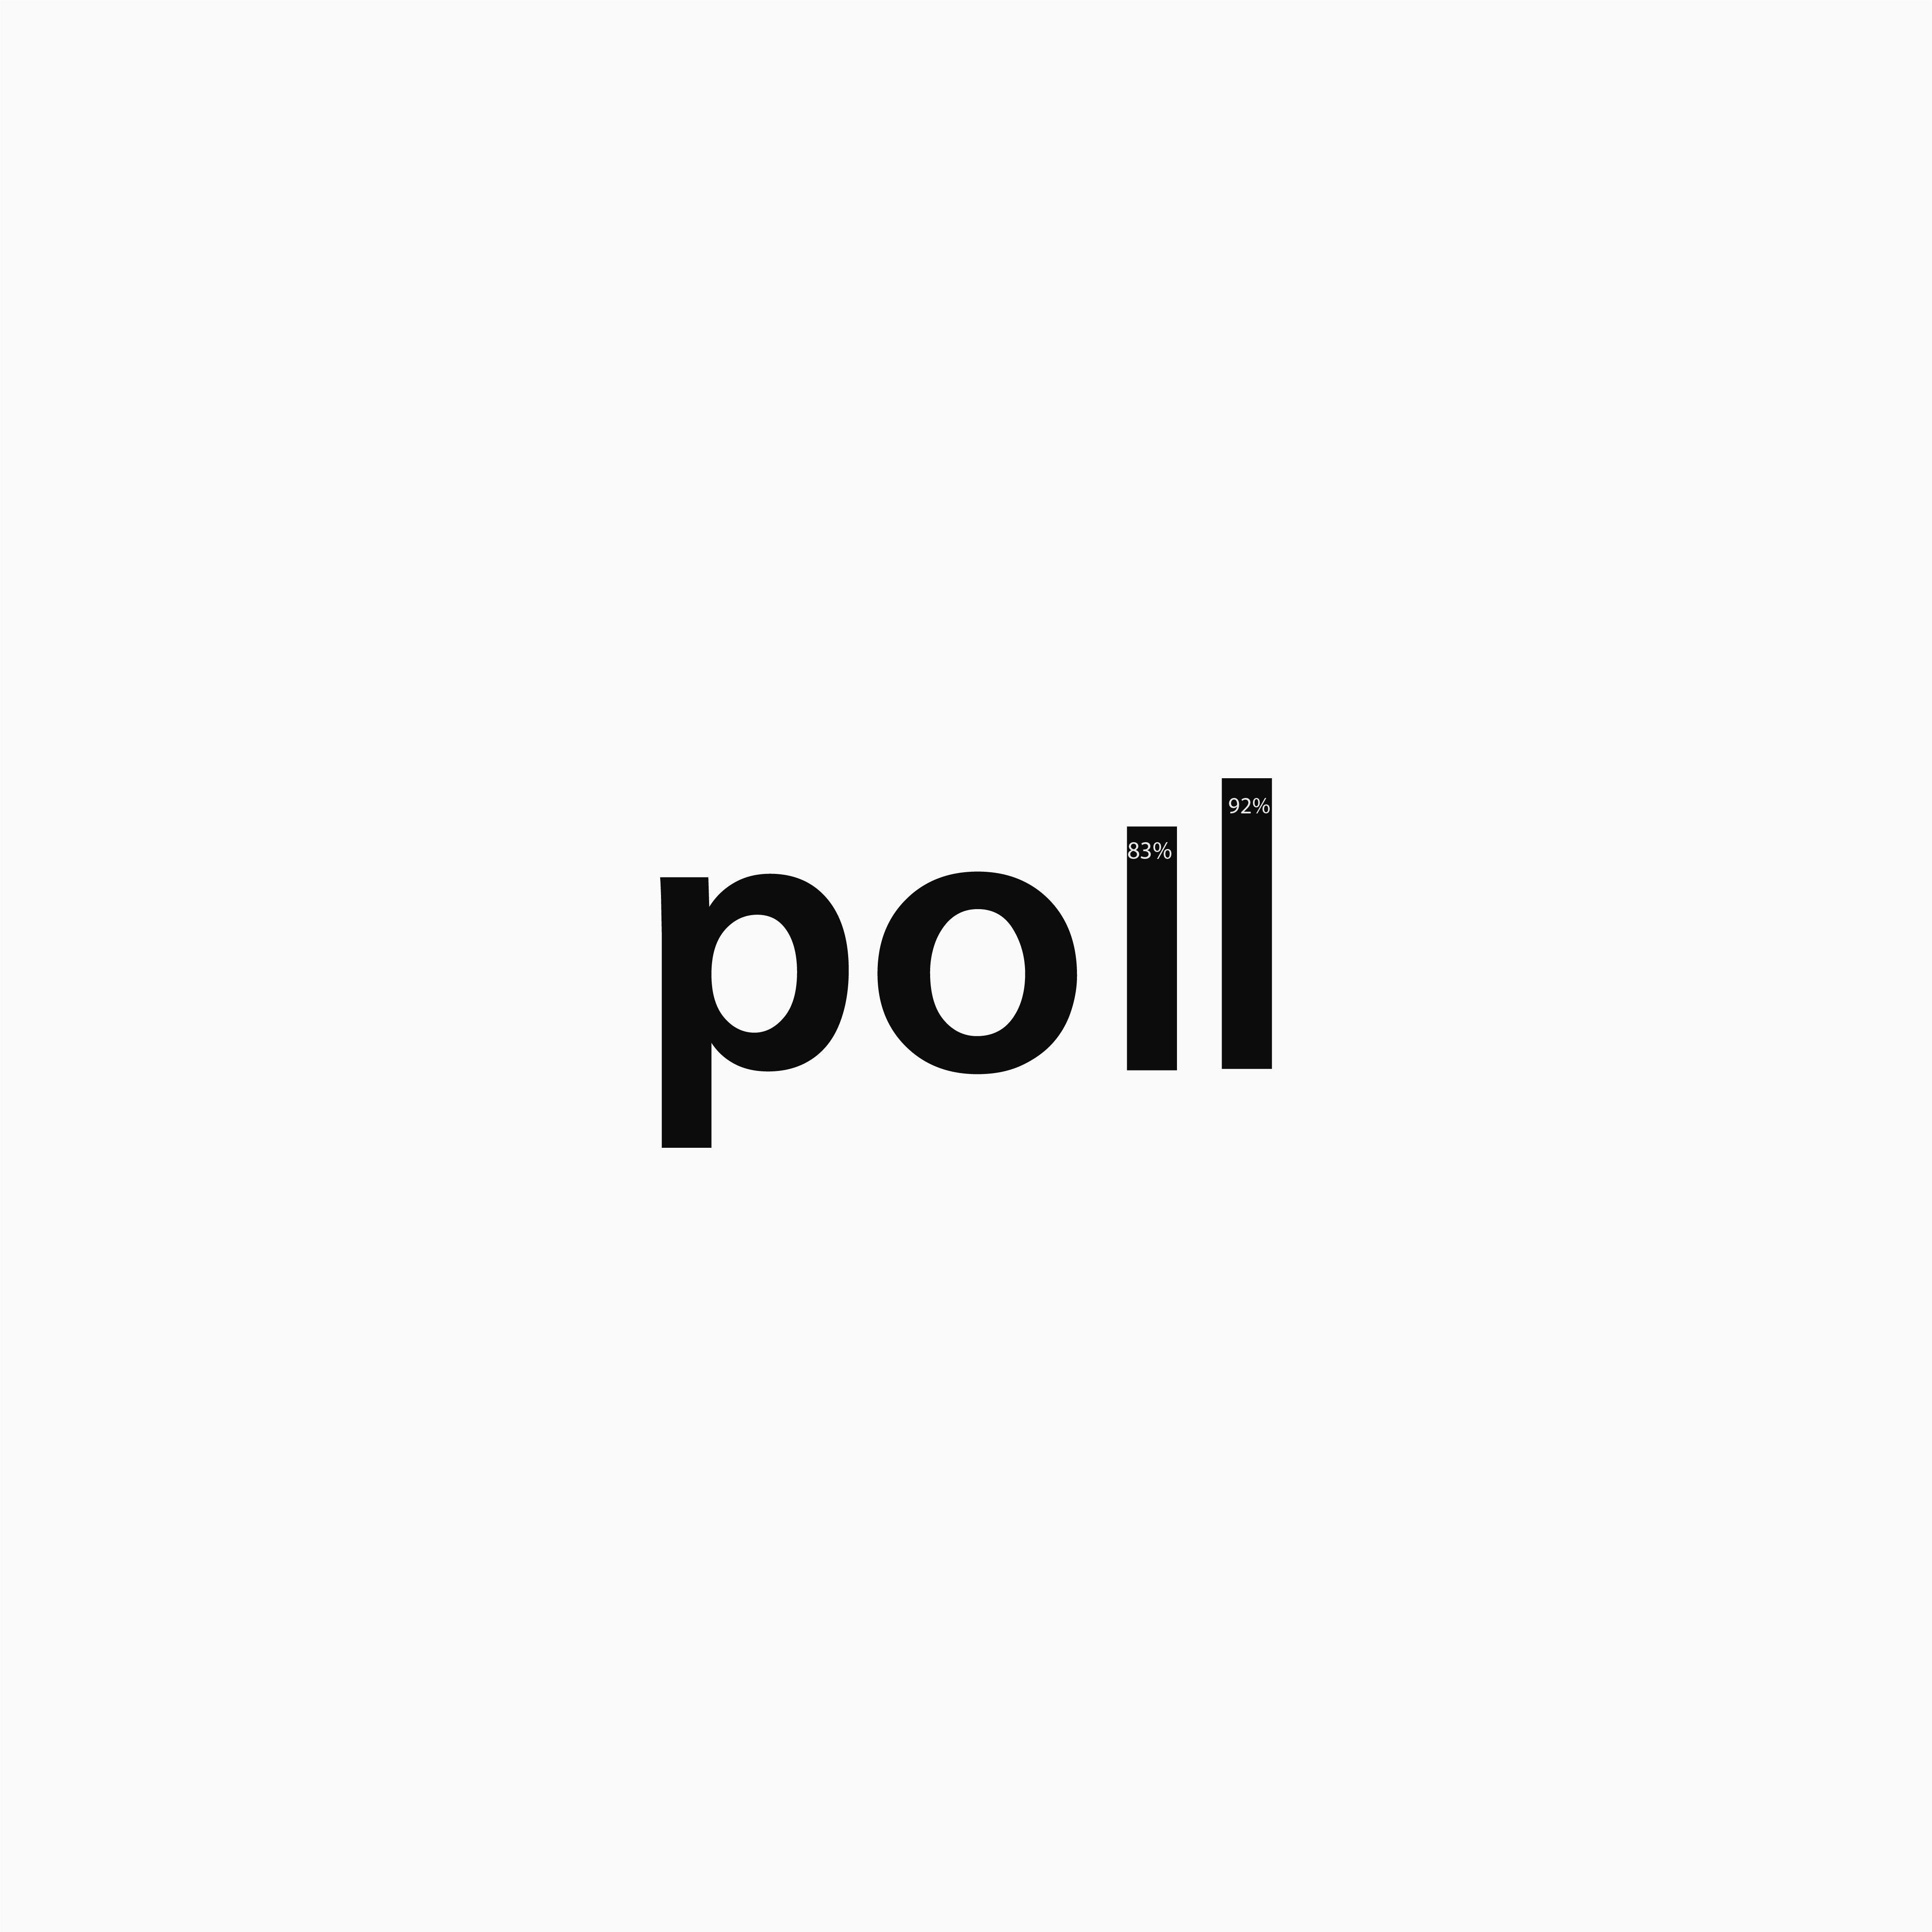 Poll Logo - POLL 15/100. | 100 creative & minimalistic logo designs | Logos ...